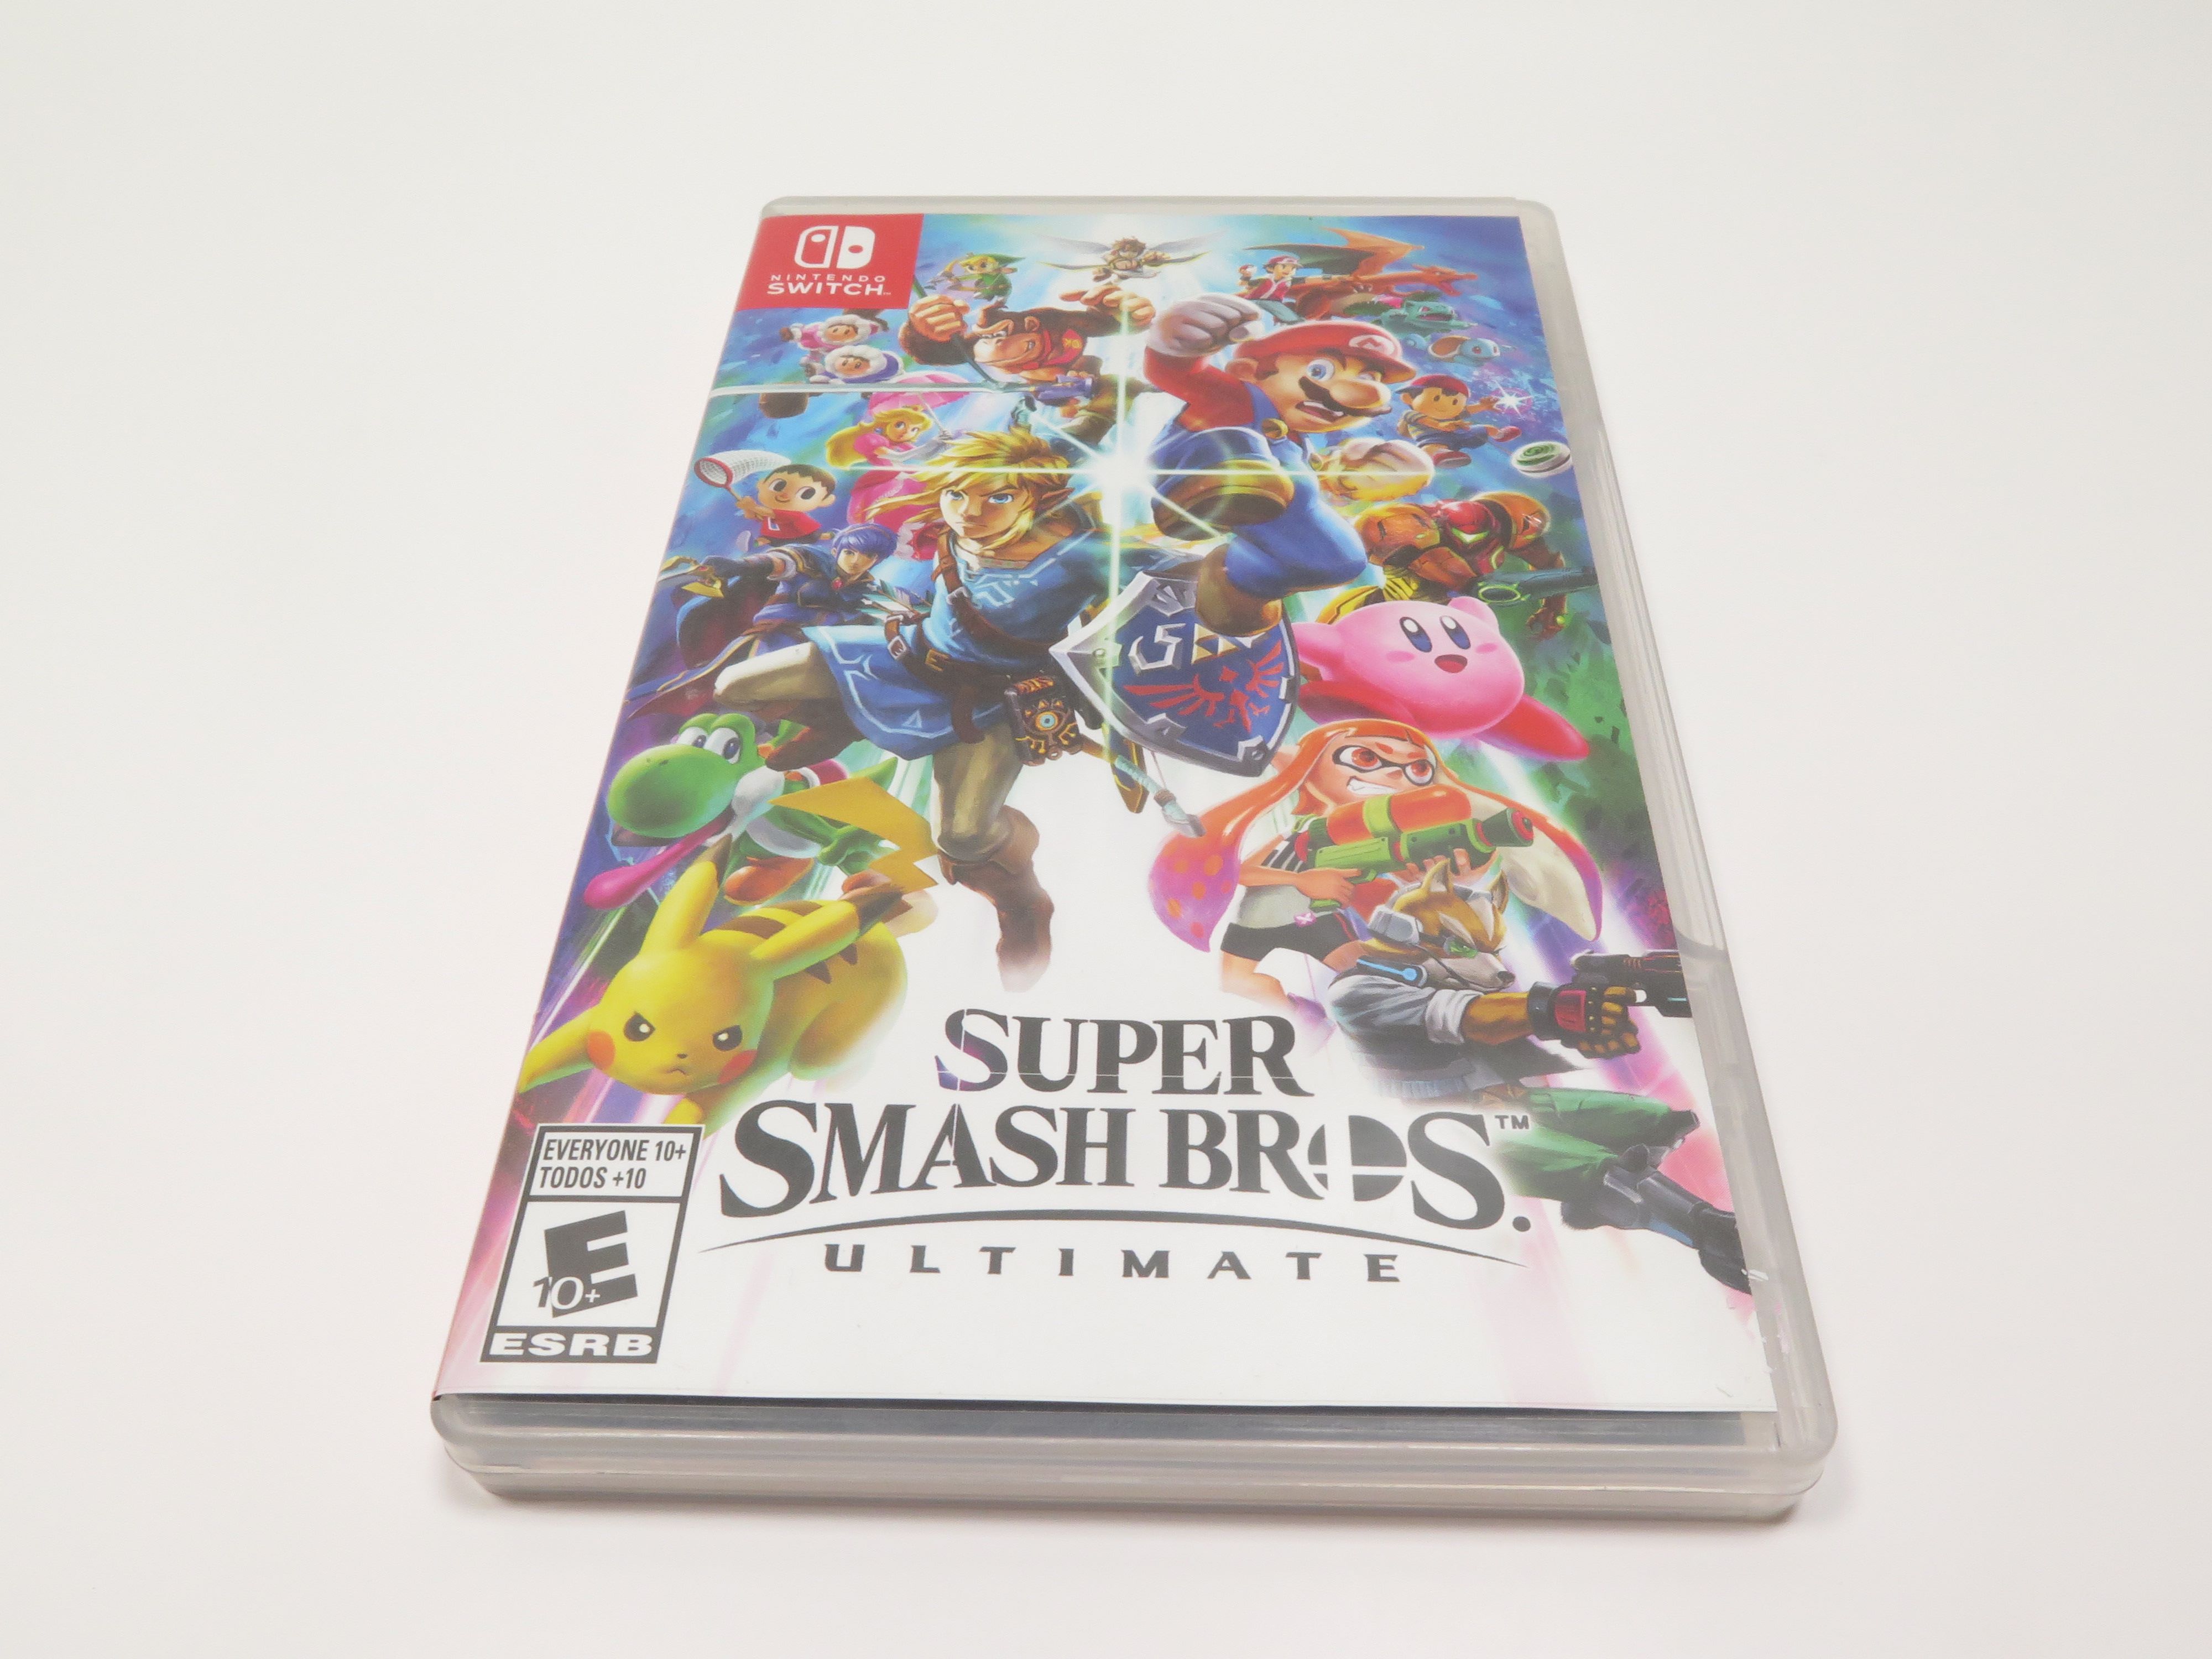 Nintendo Switch Hac 008 Super Smash Bros Ultimate Video Game Cartridge 6226 2332